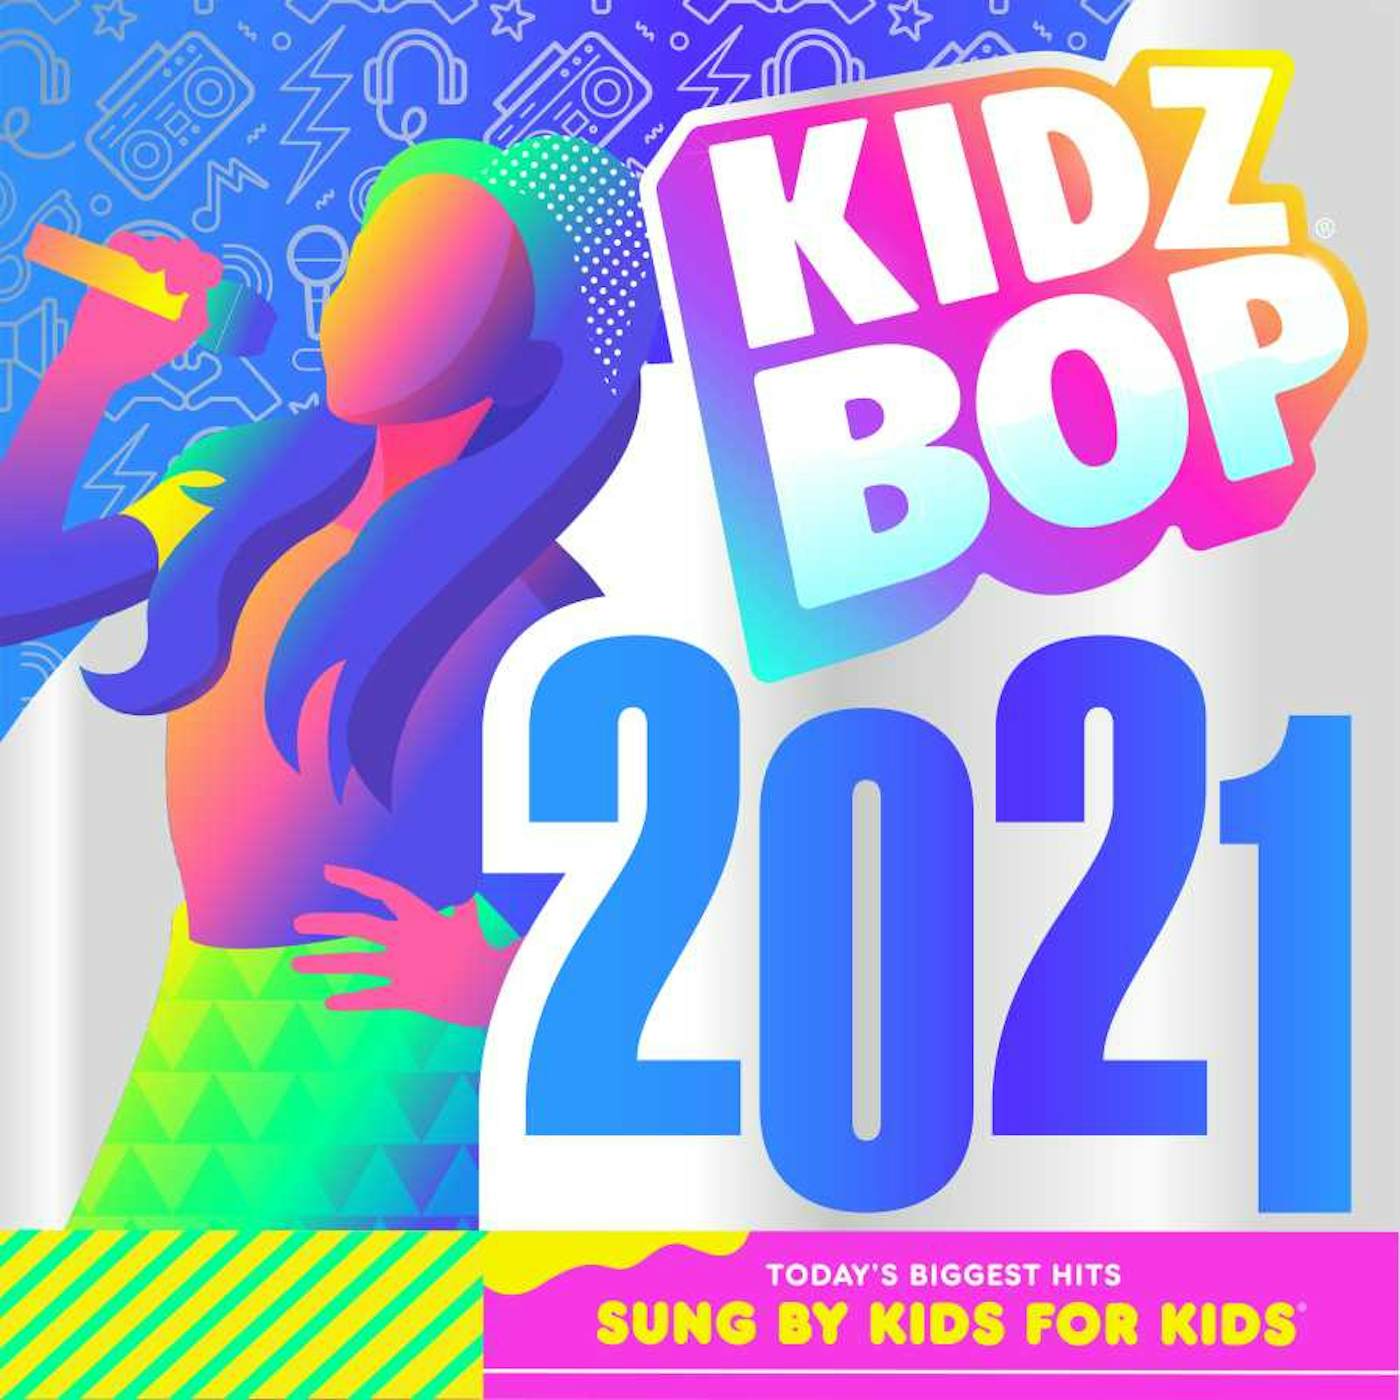 KIDZ BOP 2021 Vinyl Record